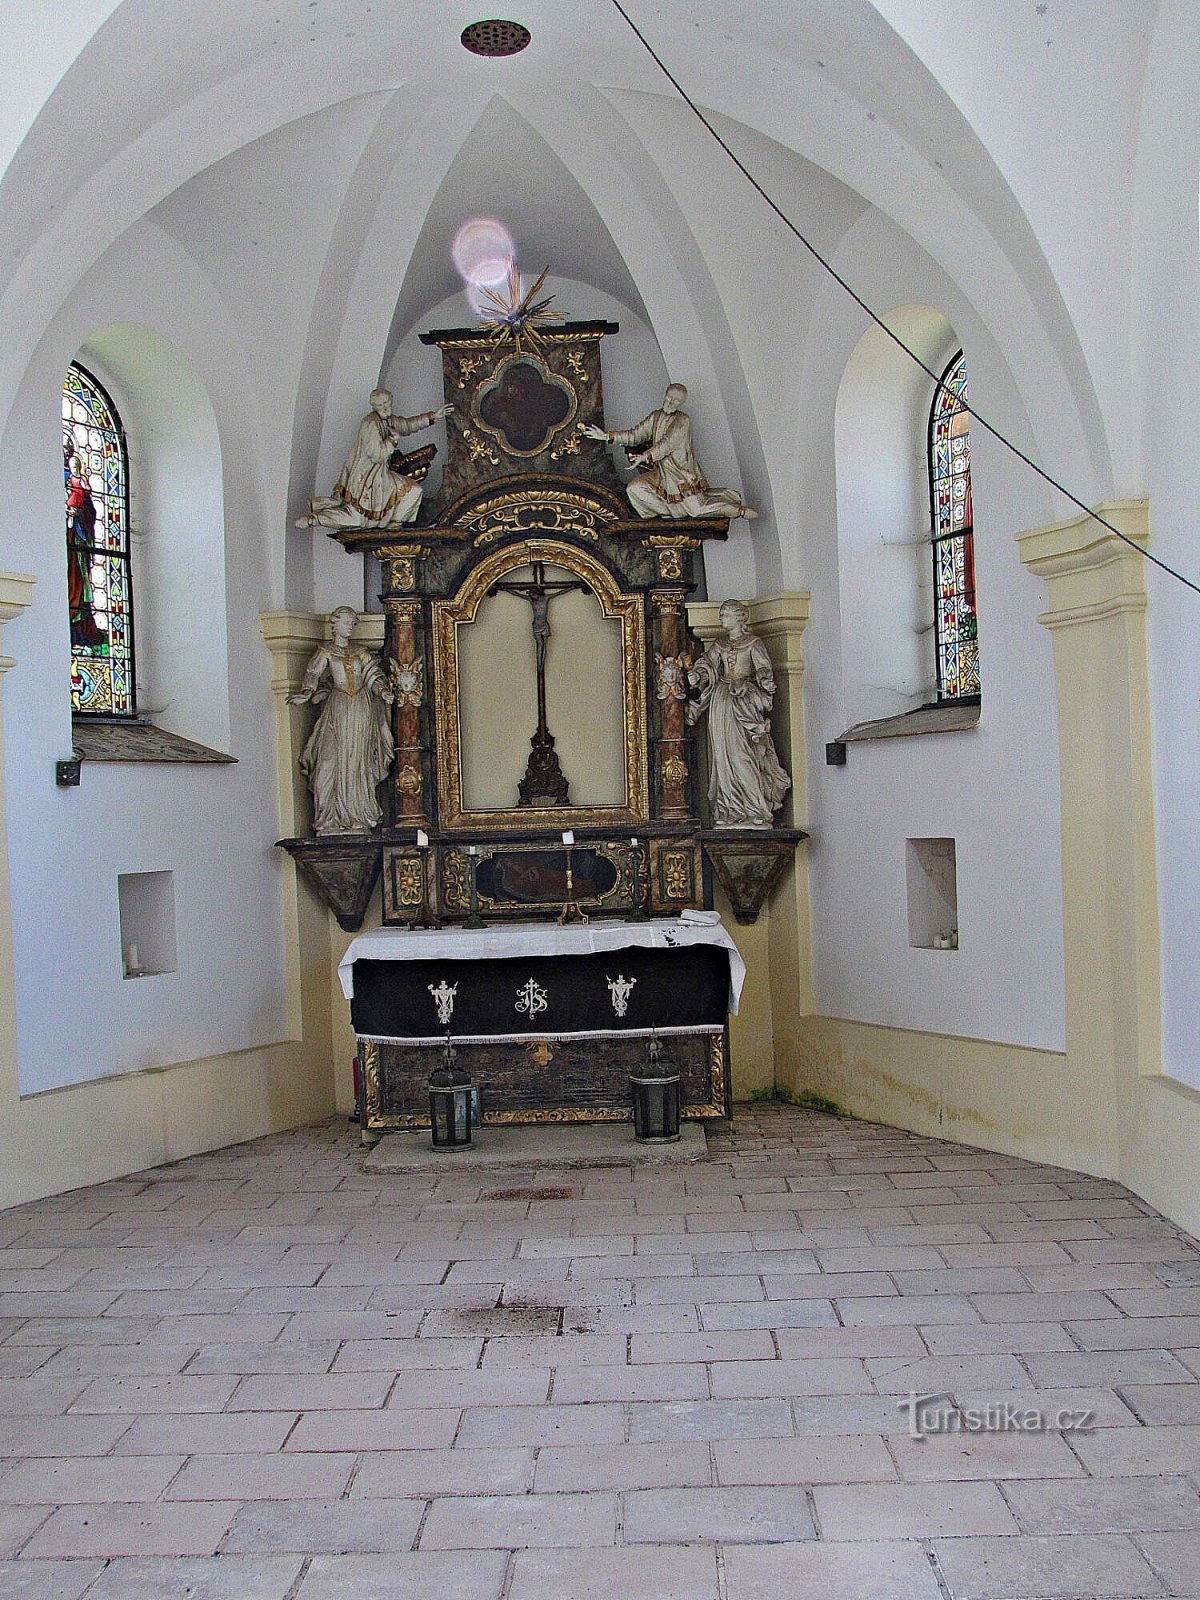 Dačice - capela do cemitério de St. Roch, Šebestián e St. Rosalie